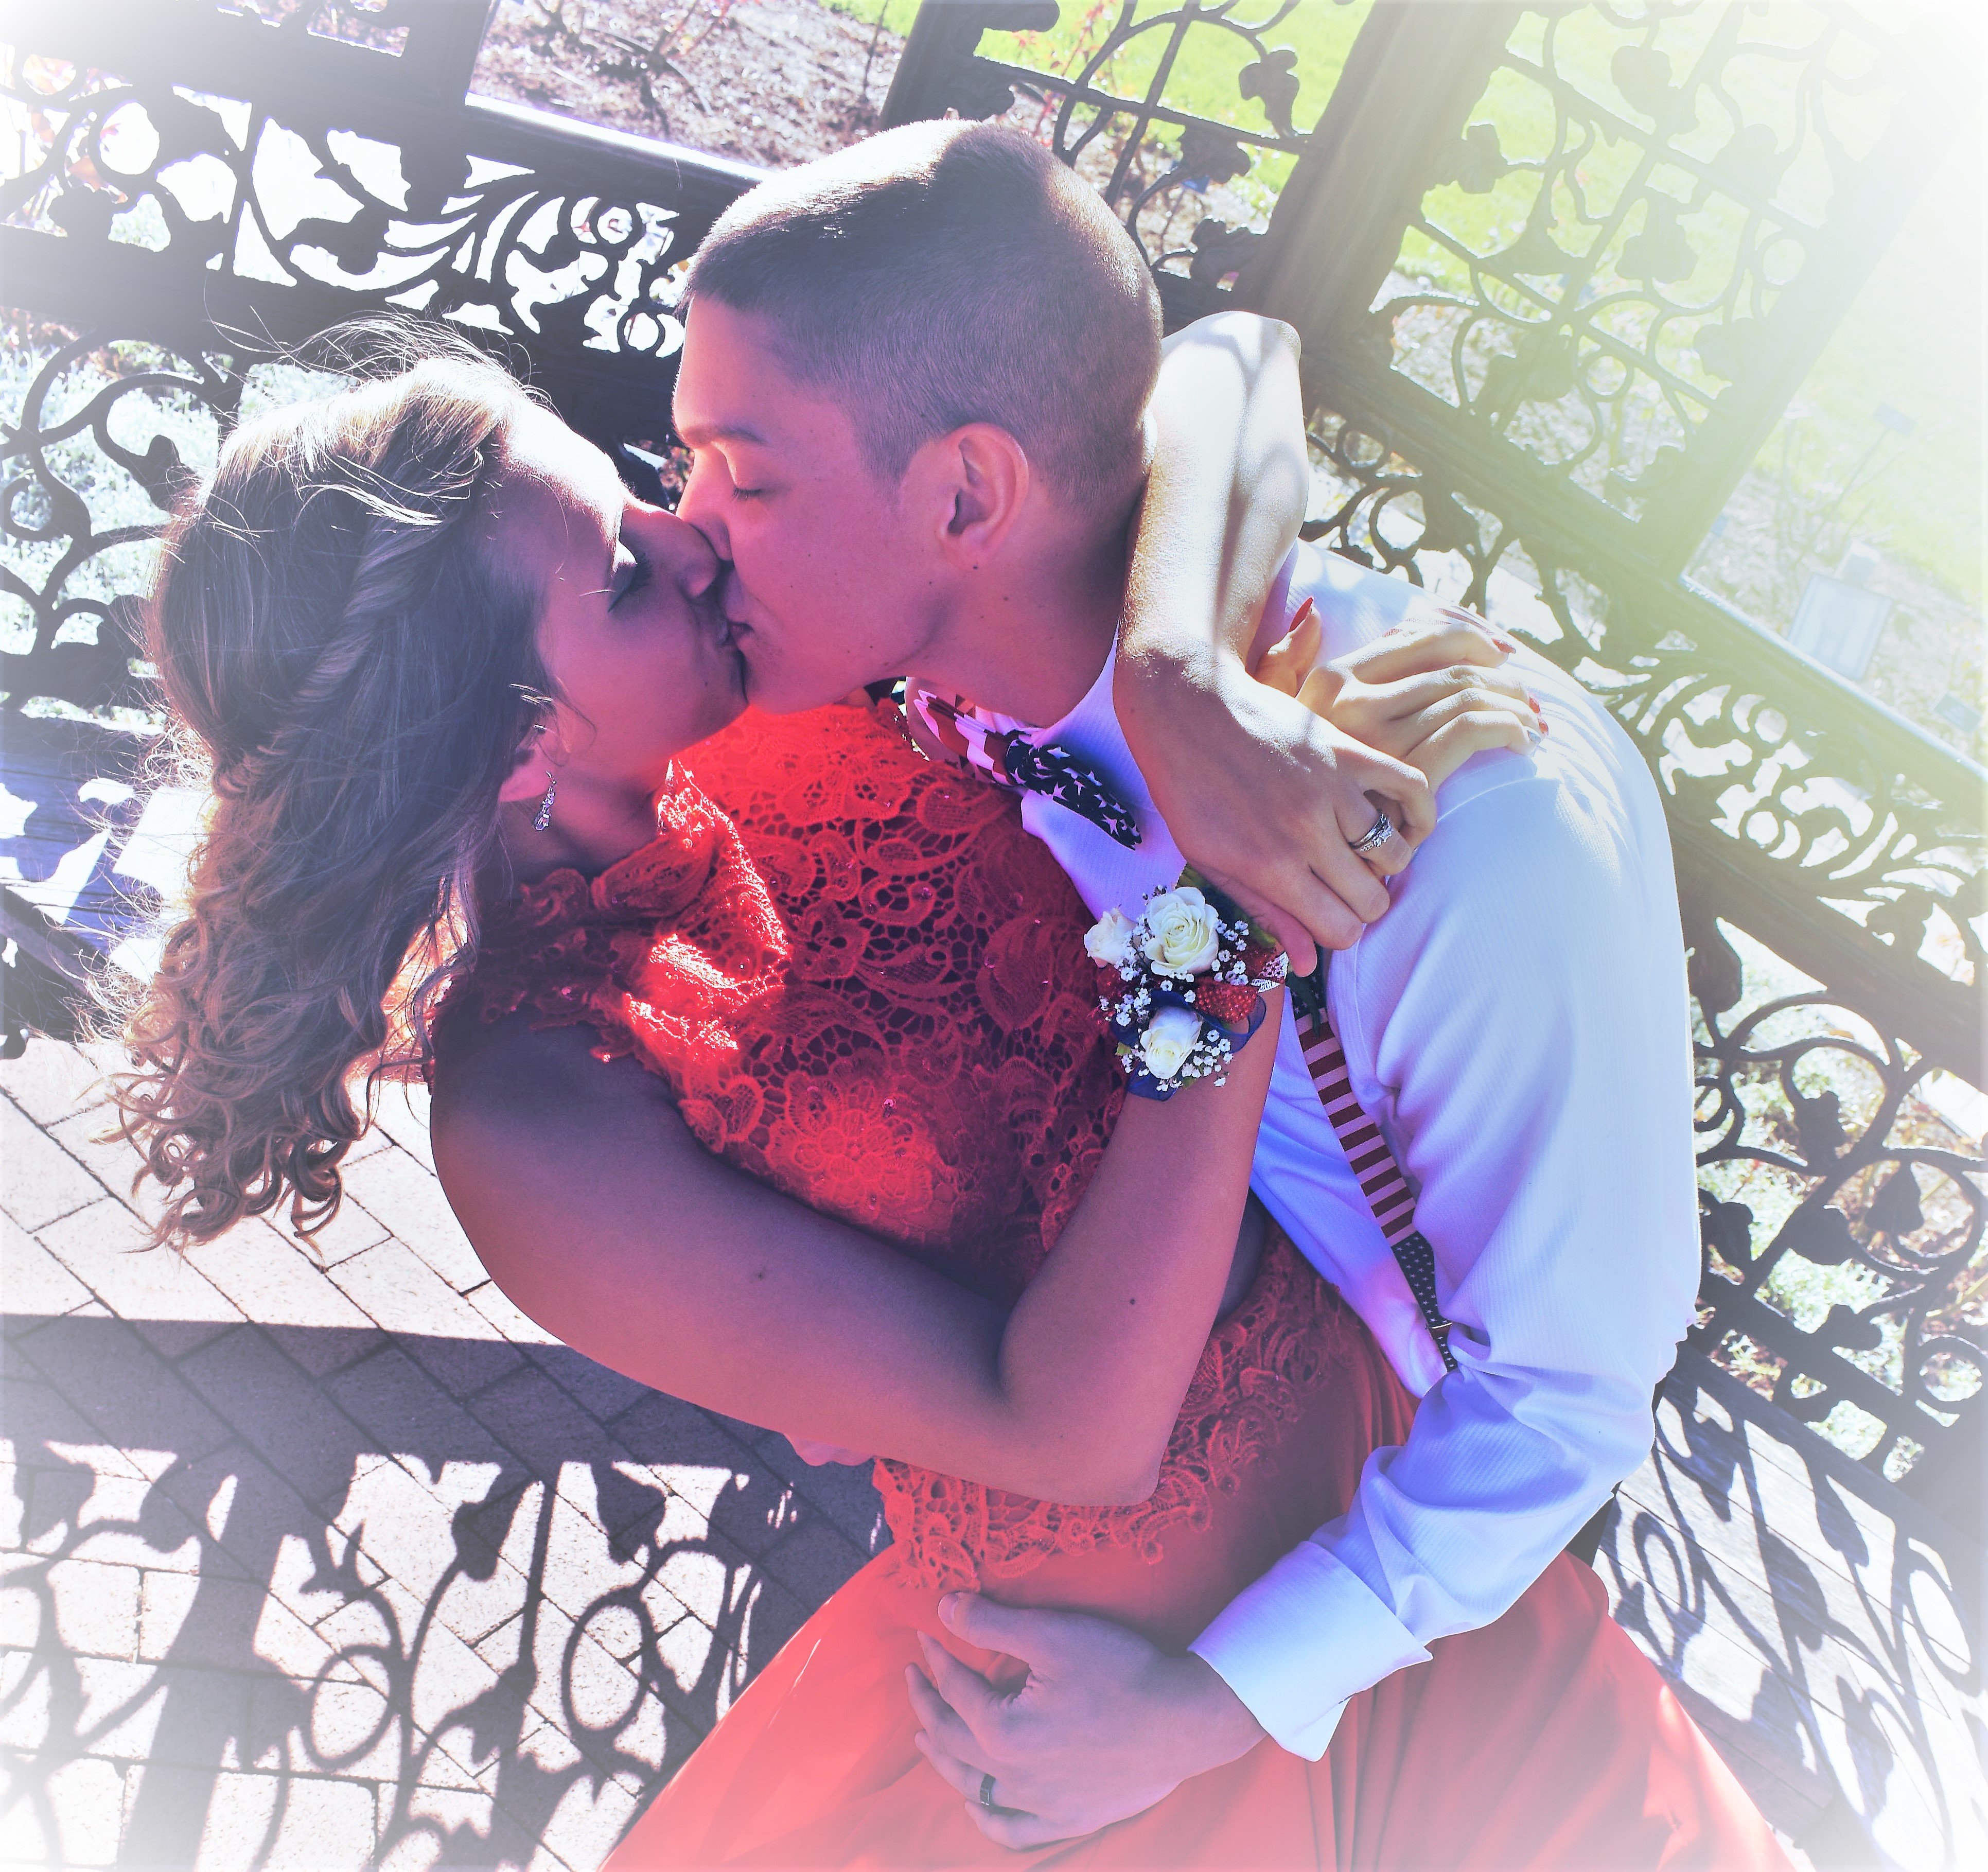 Mr. & Mrs. Merica - Married in High School - Senior Prom - kissing in the gazebo